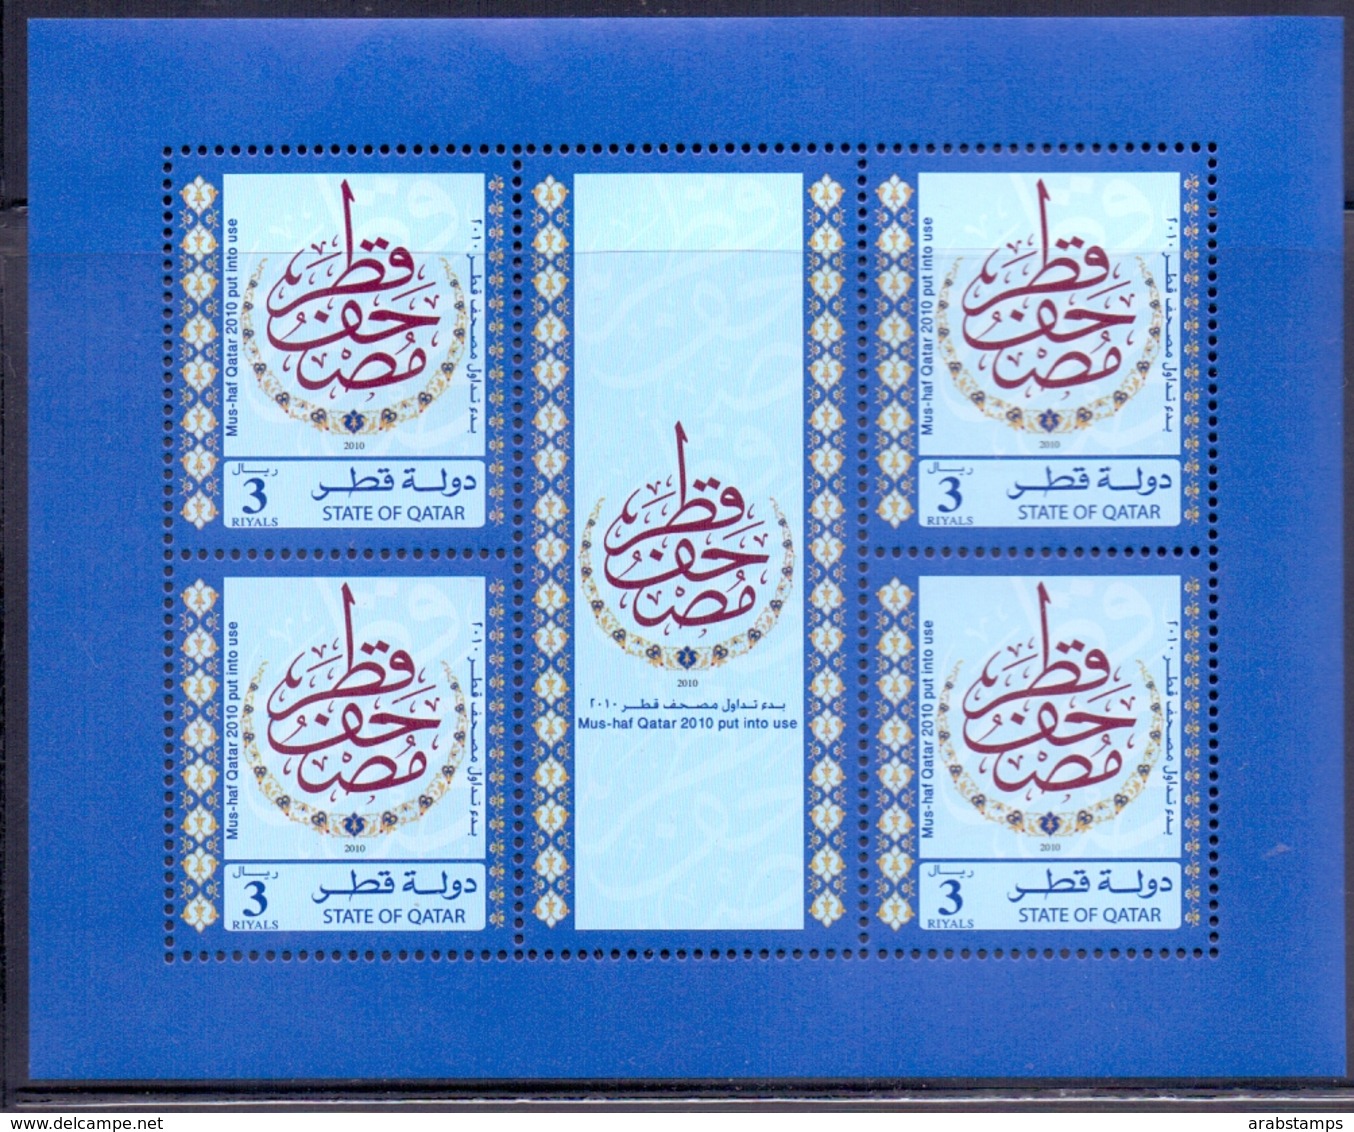 2010 QATAR Mus – Haf Qatar Full Sheet 4 Values MNH - Qatar